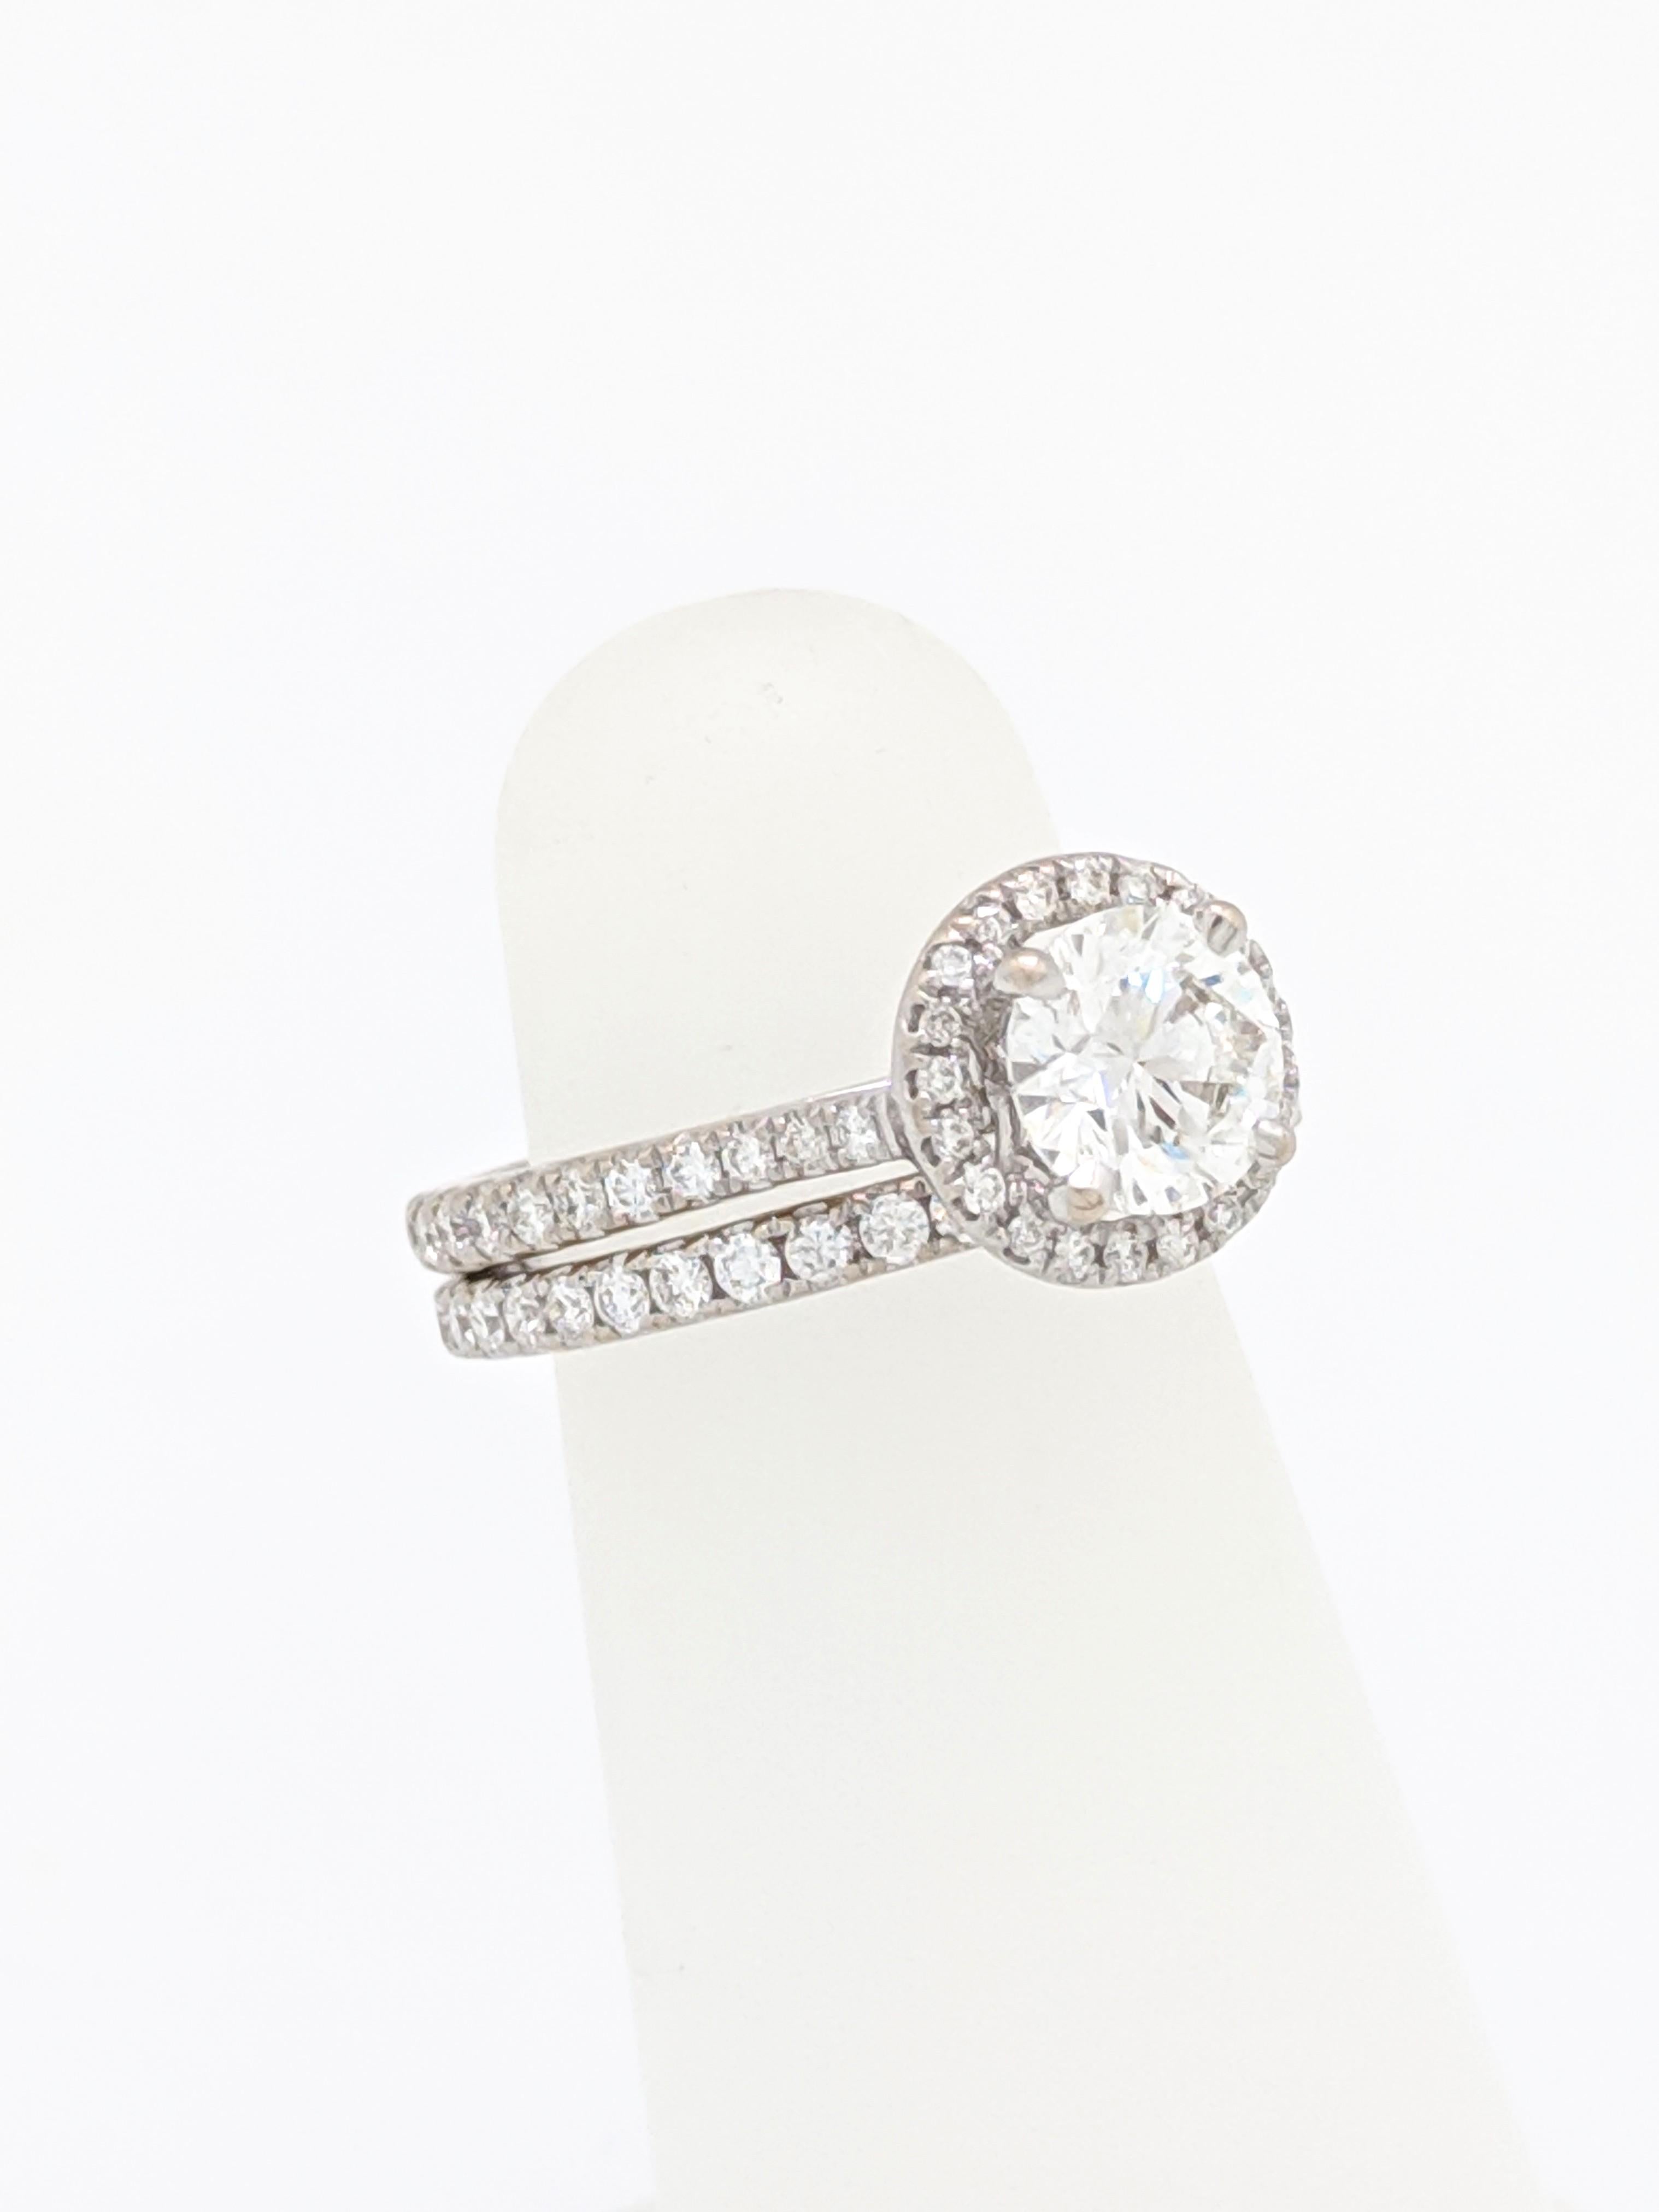 .96 carat diamond ring